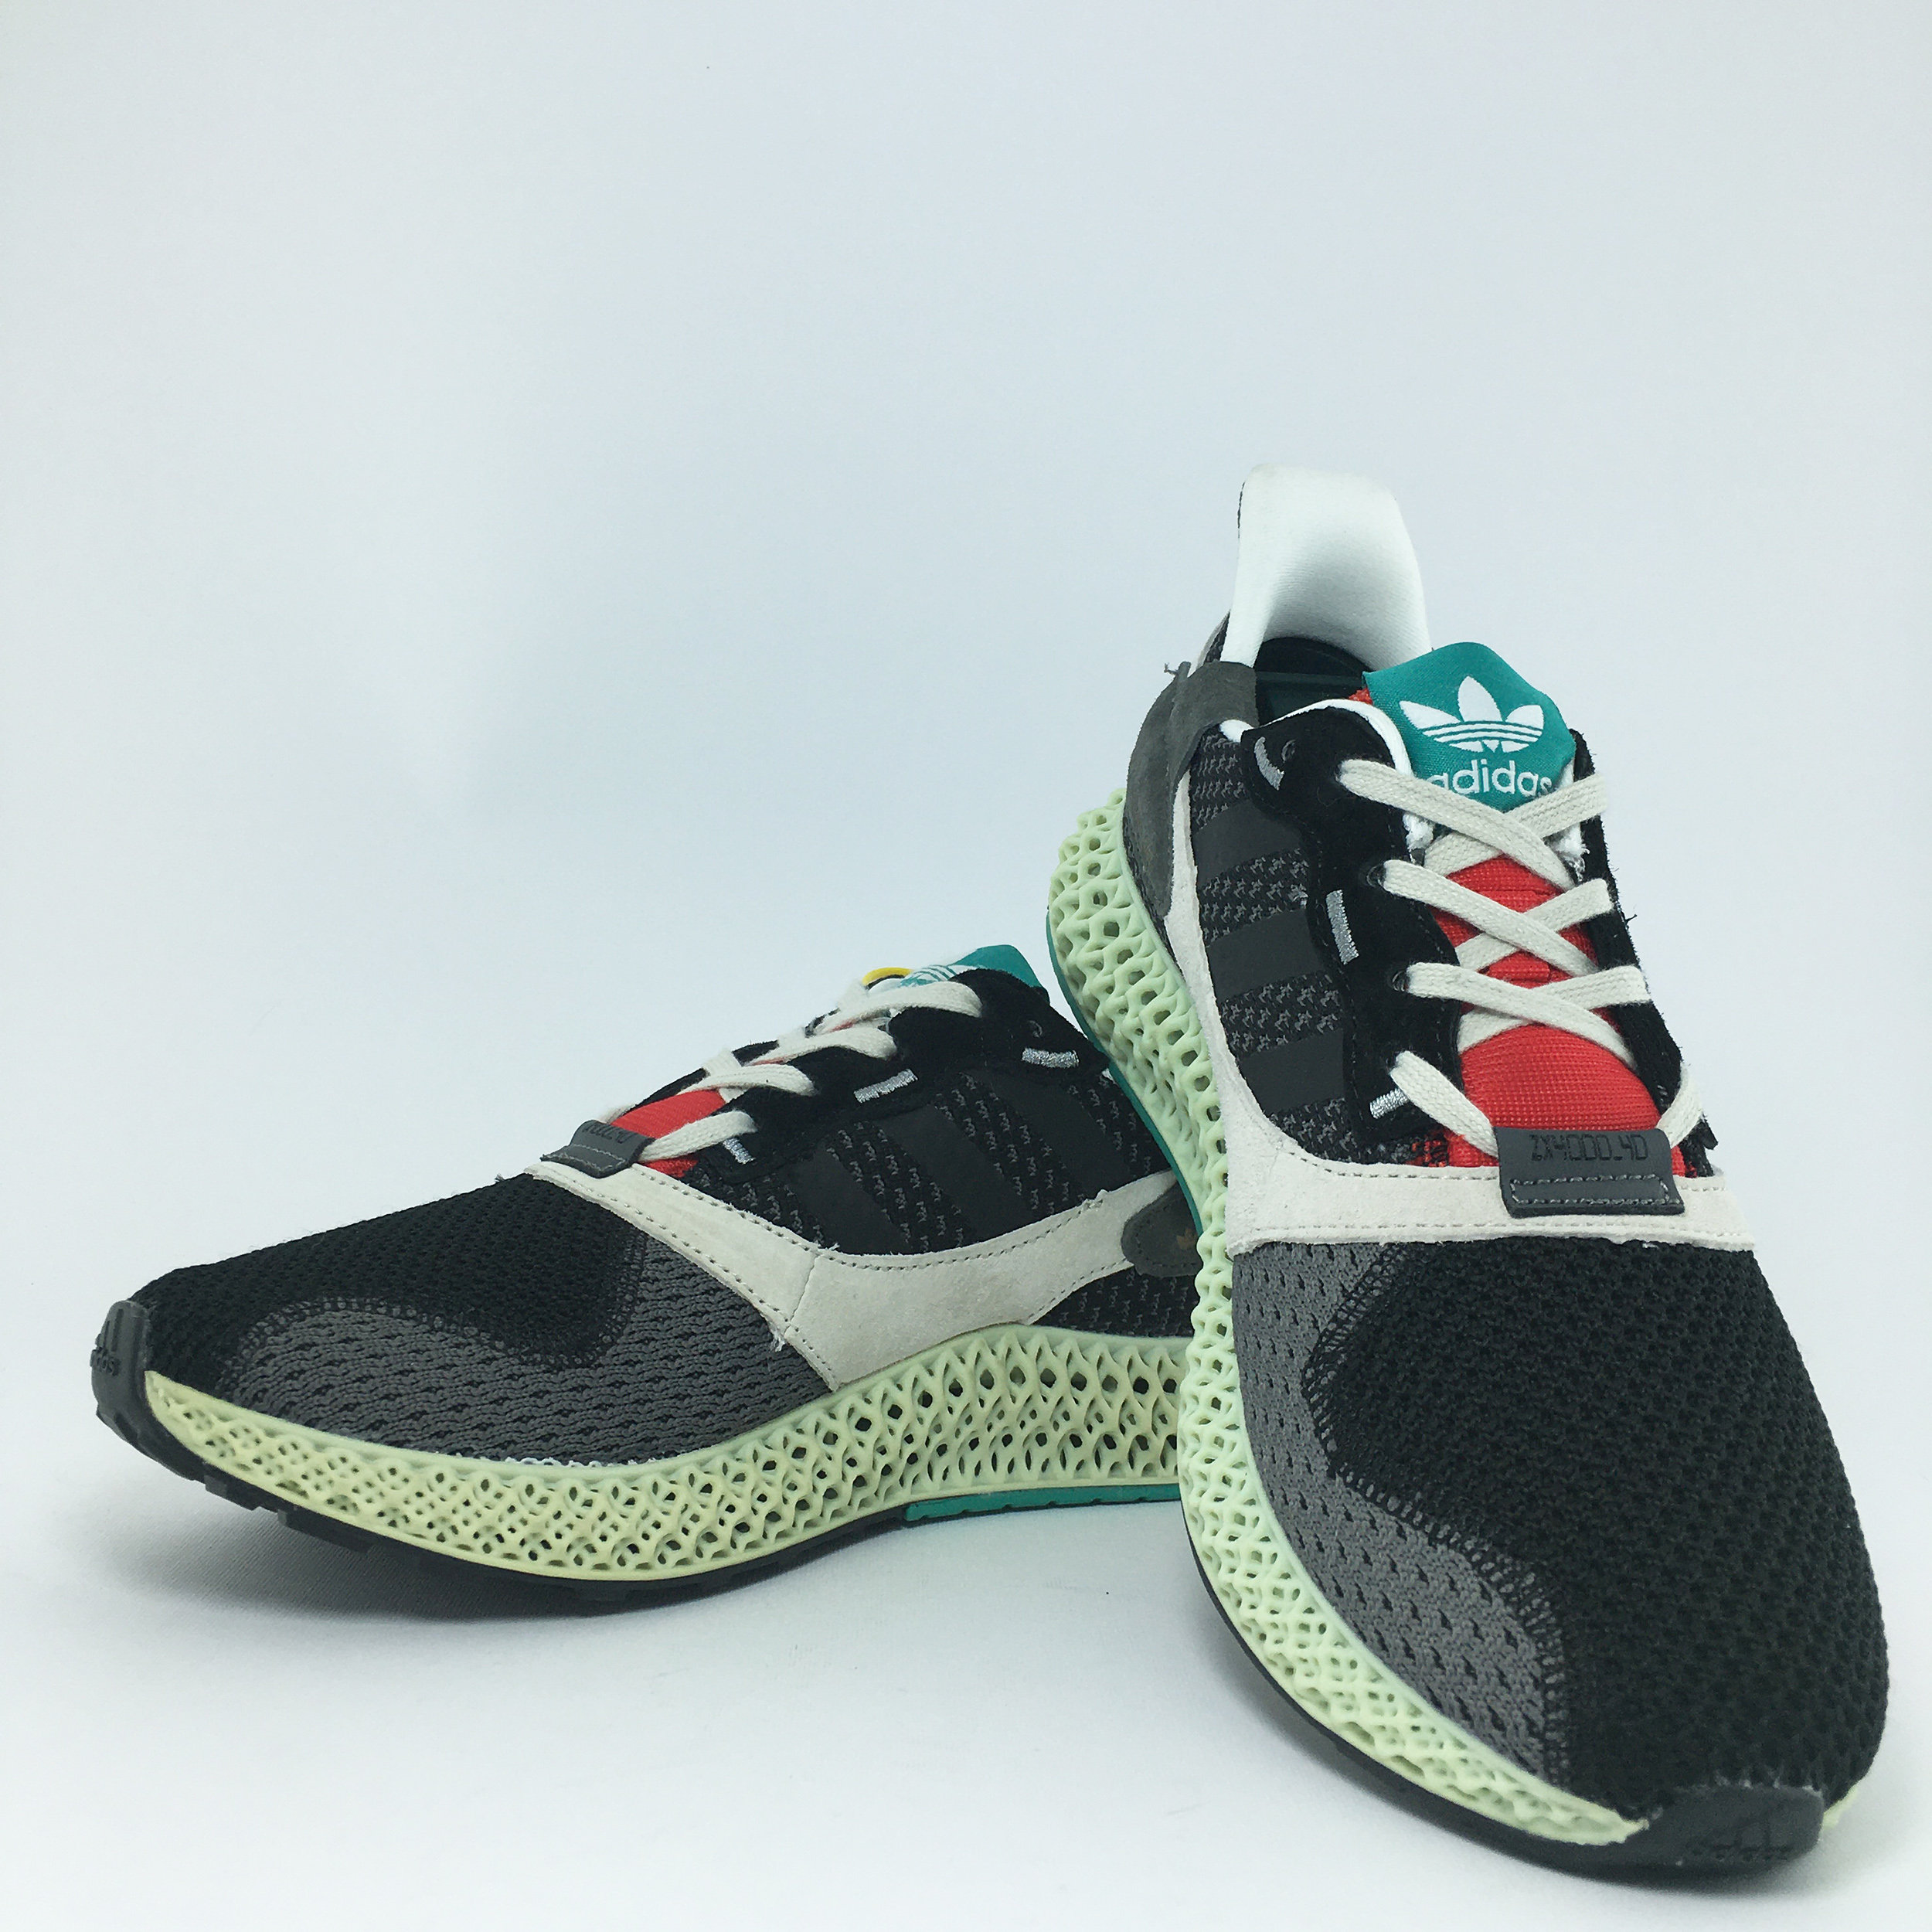  کفش مخصوص پیاده روی مردانه آدیداس مدل ZX4000 4D کد A47